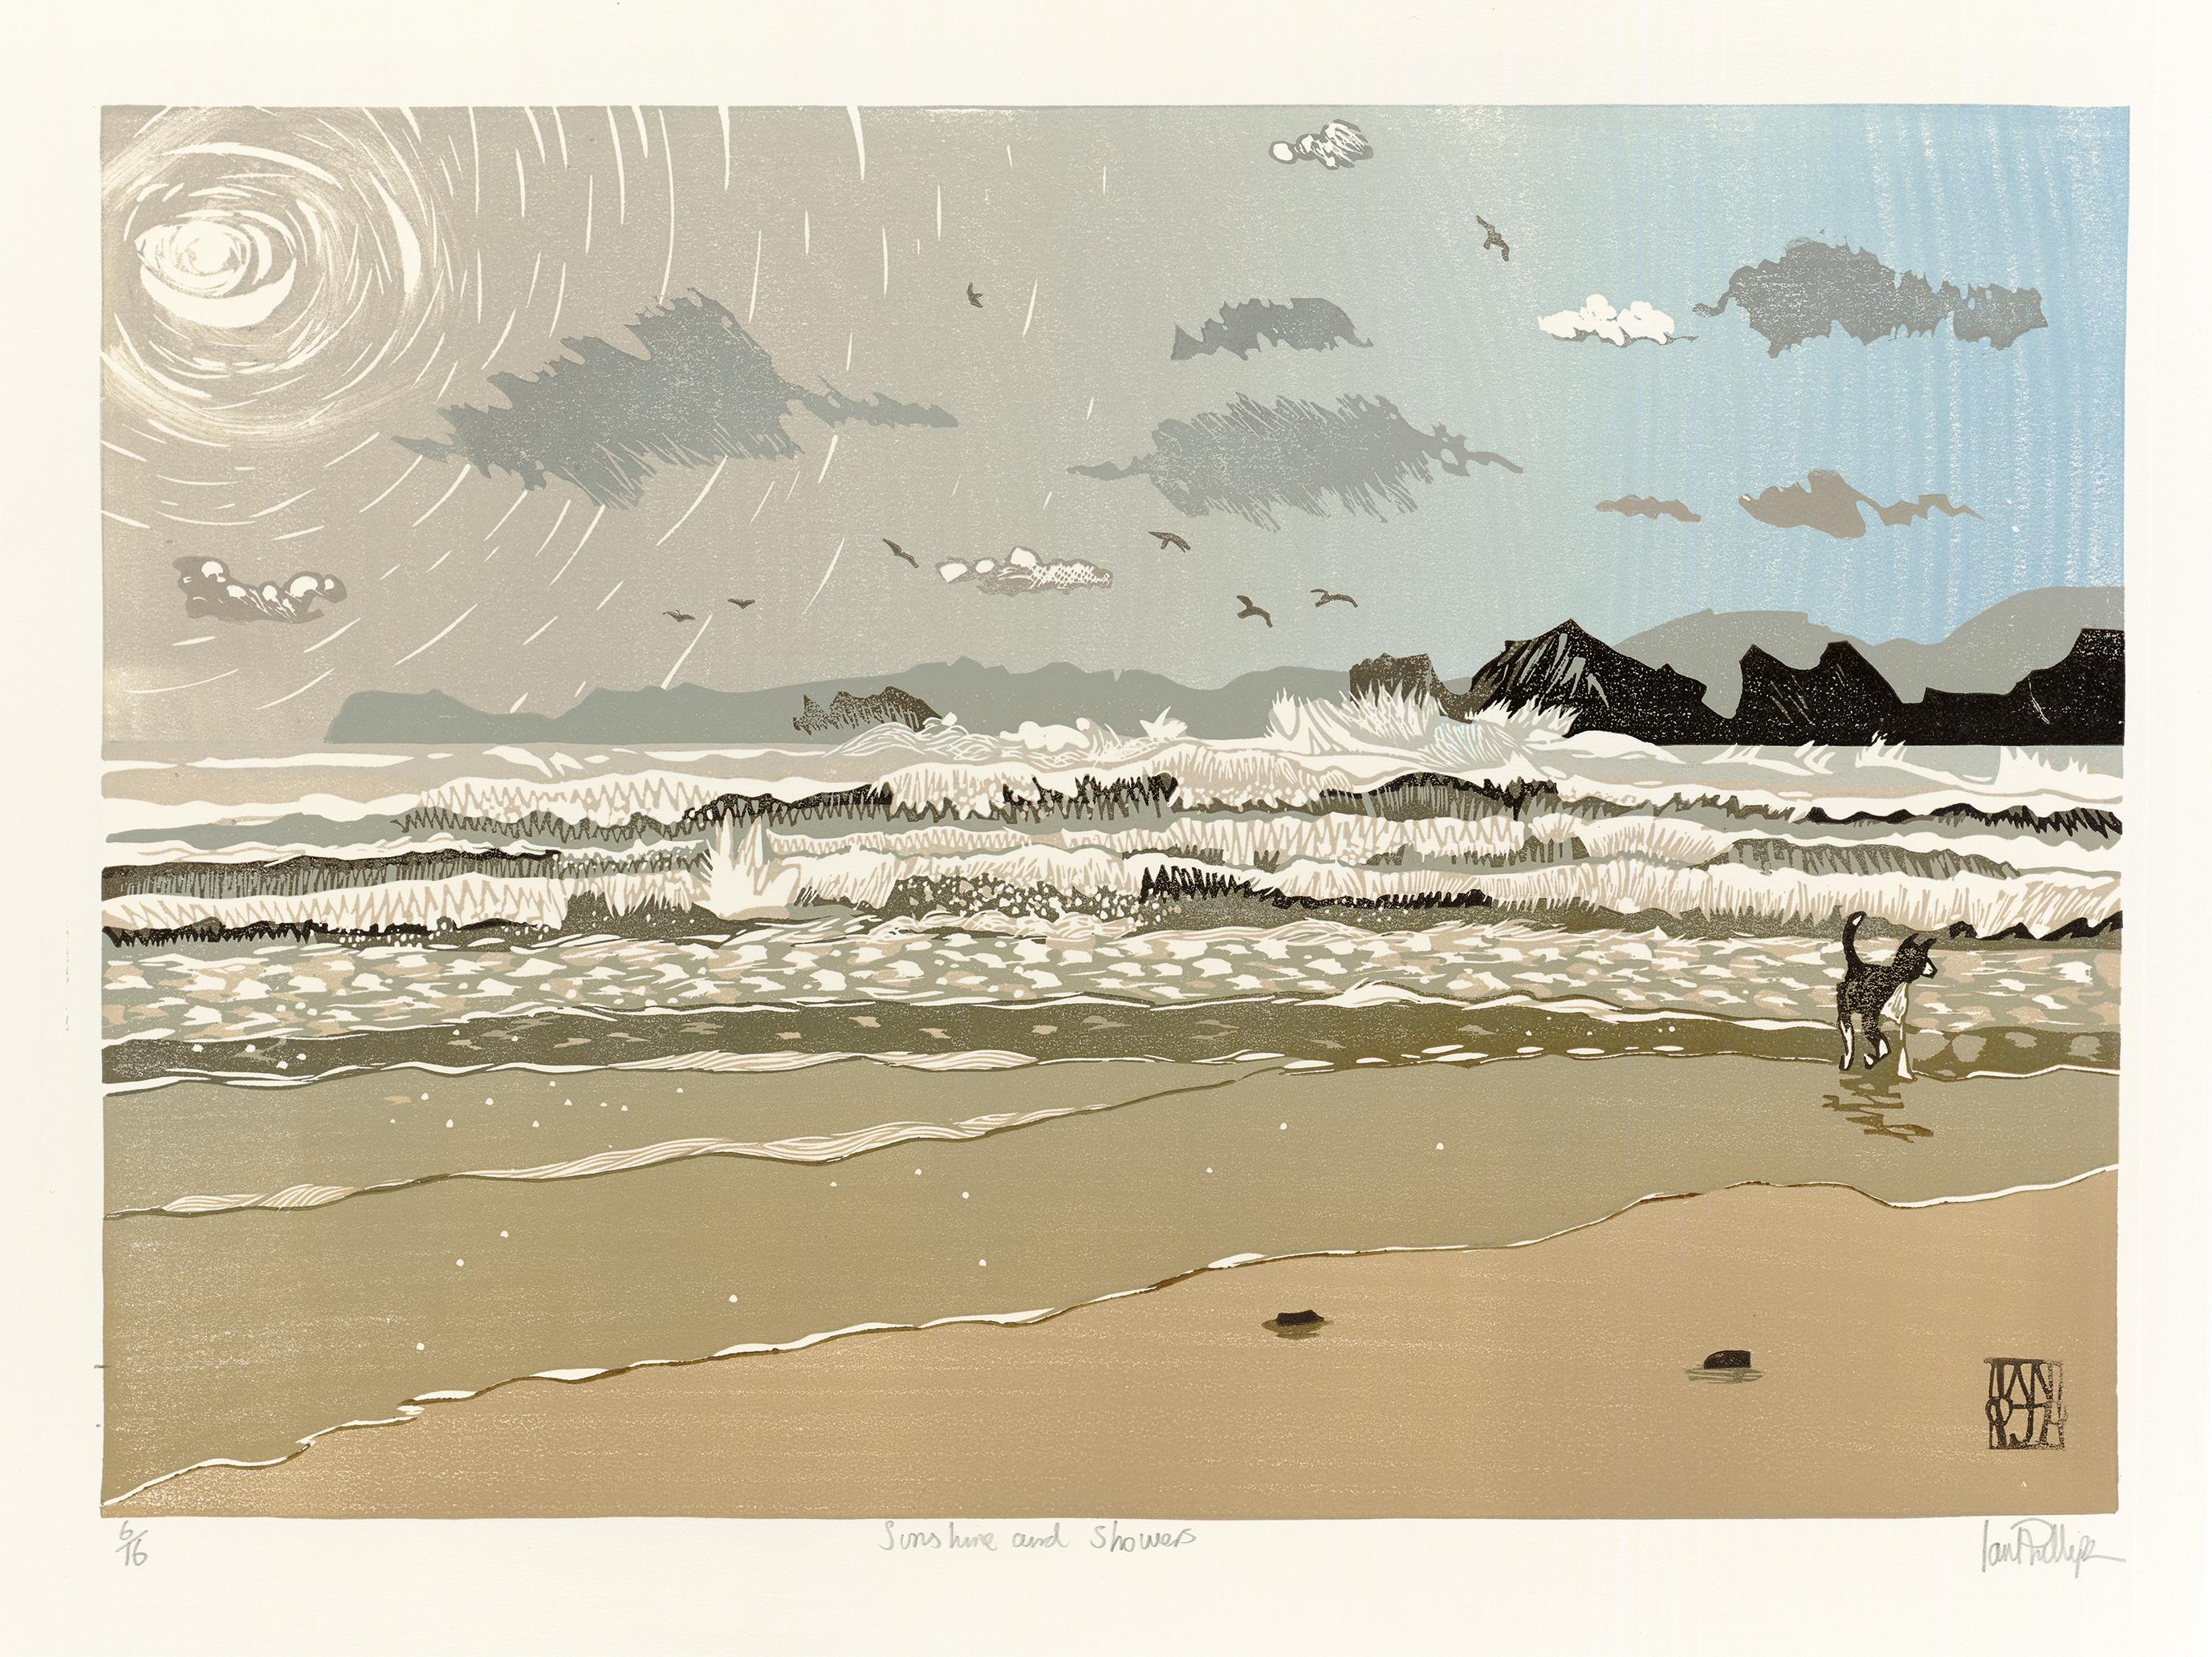 Ian Phillips, Sunshine and Showers, Limited Edition Seascape Print, Seaside Art